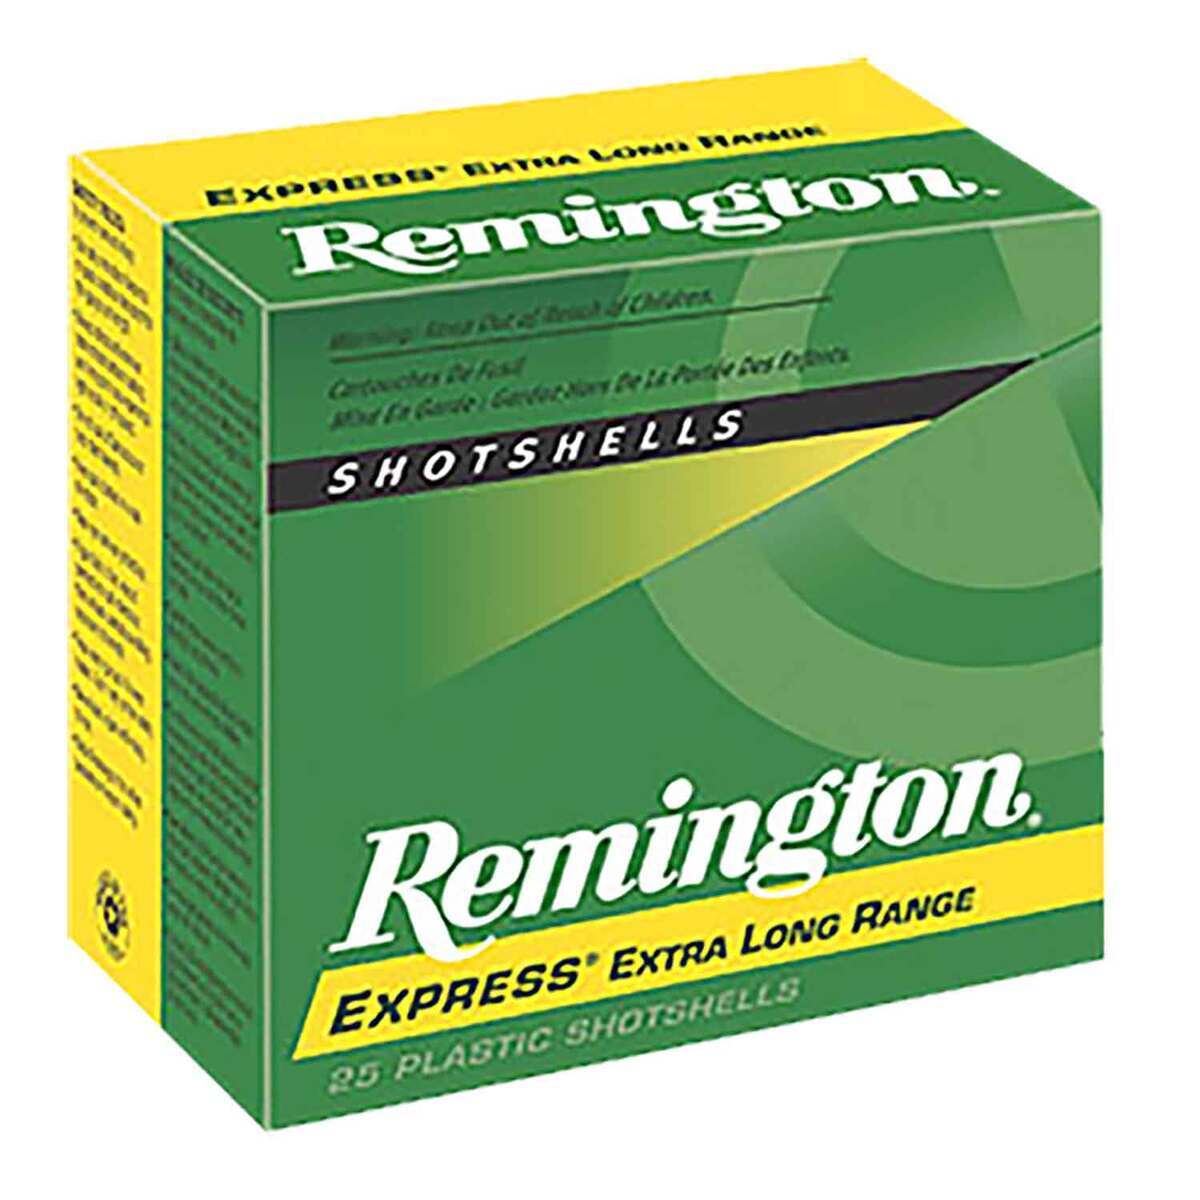 Remington Express Long Range Loads, .410 Gauge, 3 Shell, 11/16 oz., 25  Rounds - 32194, 410 Gauge Shells at Sportsman's Guide